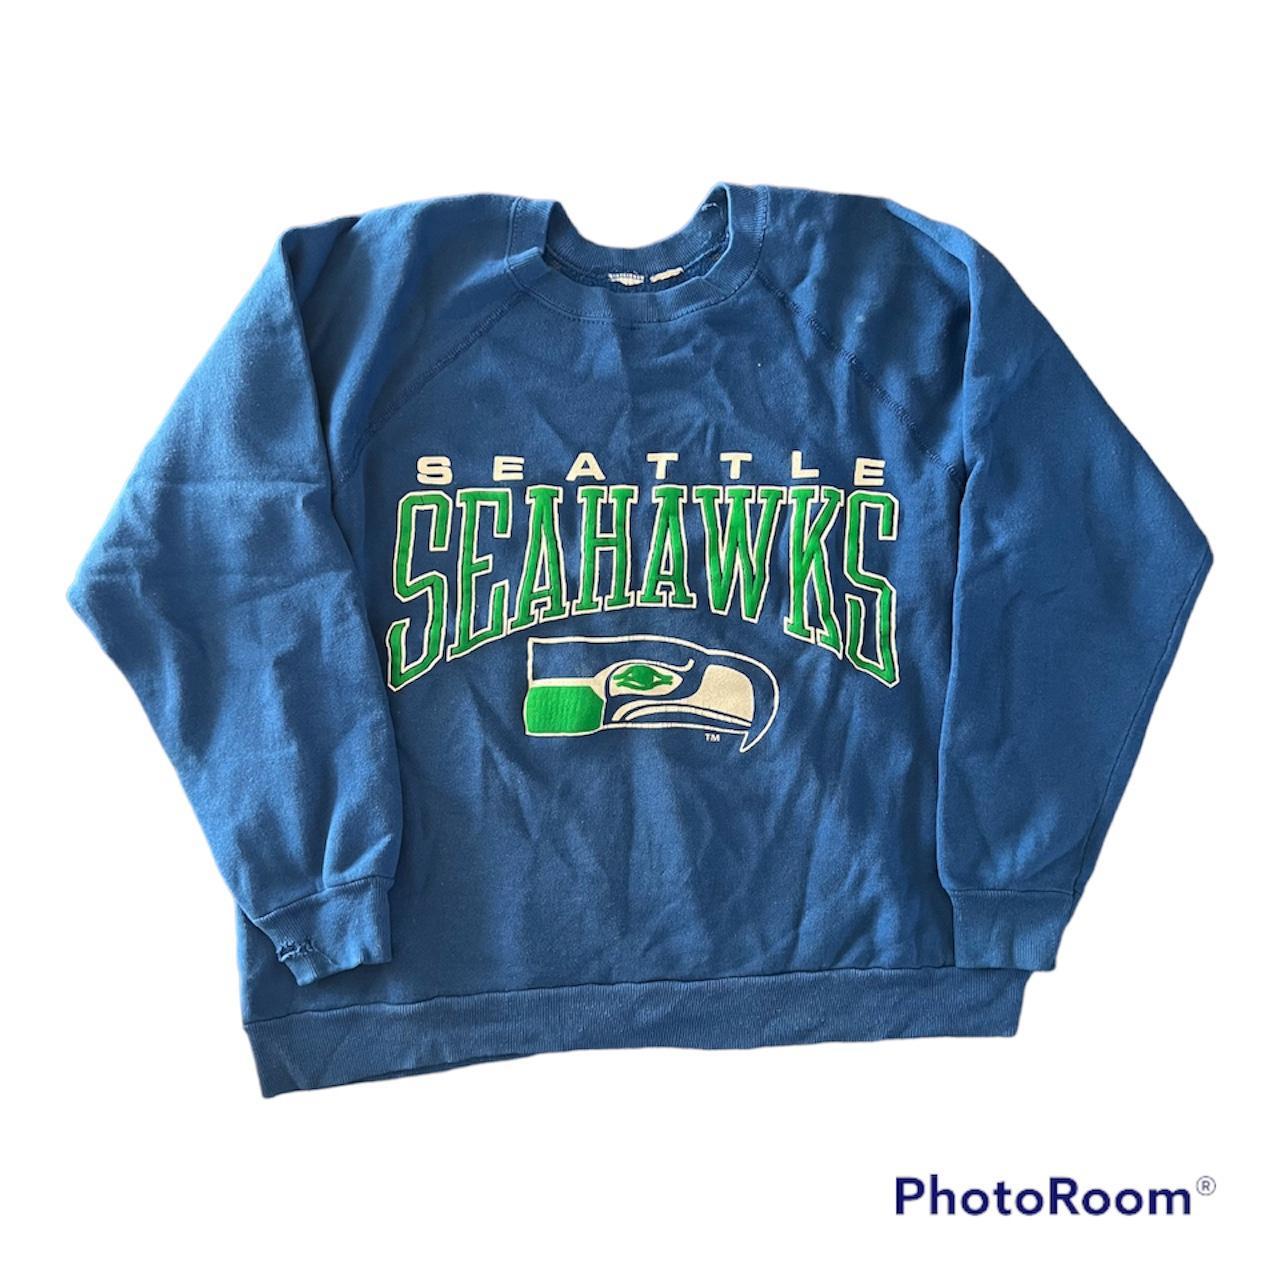 Vintage Seattle Seahawks sweatshirt. No size tag but